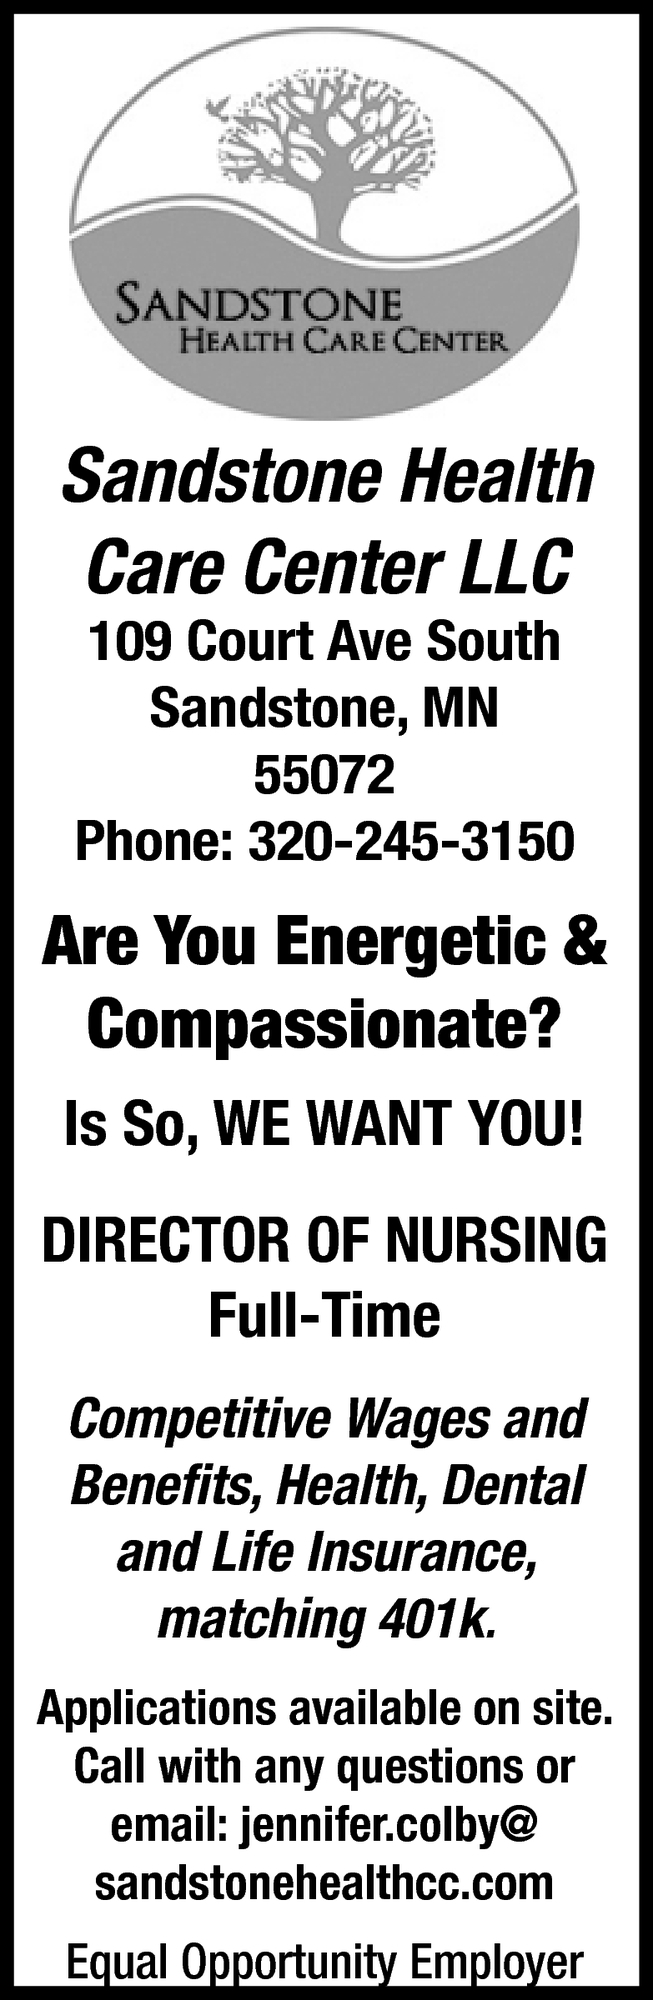 Are You Energetic & Compassionate?, Sandstone Health Care Center